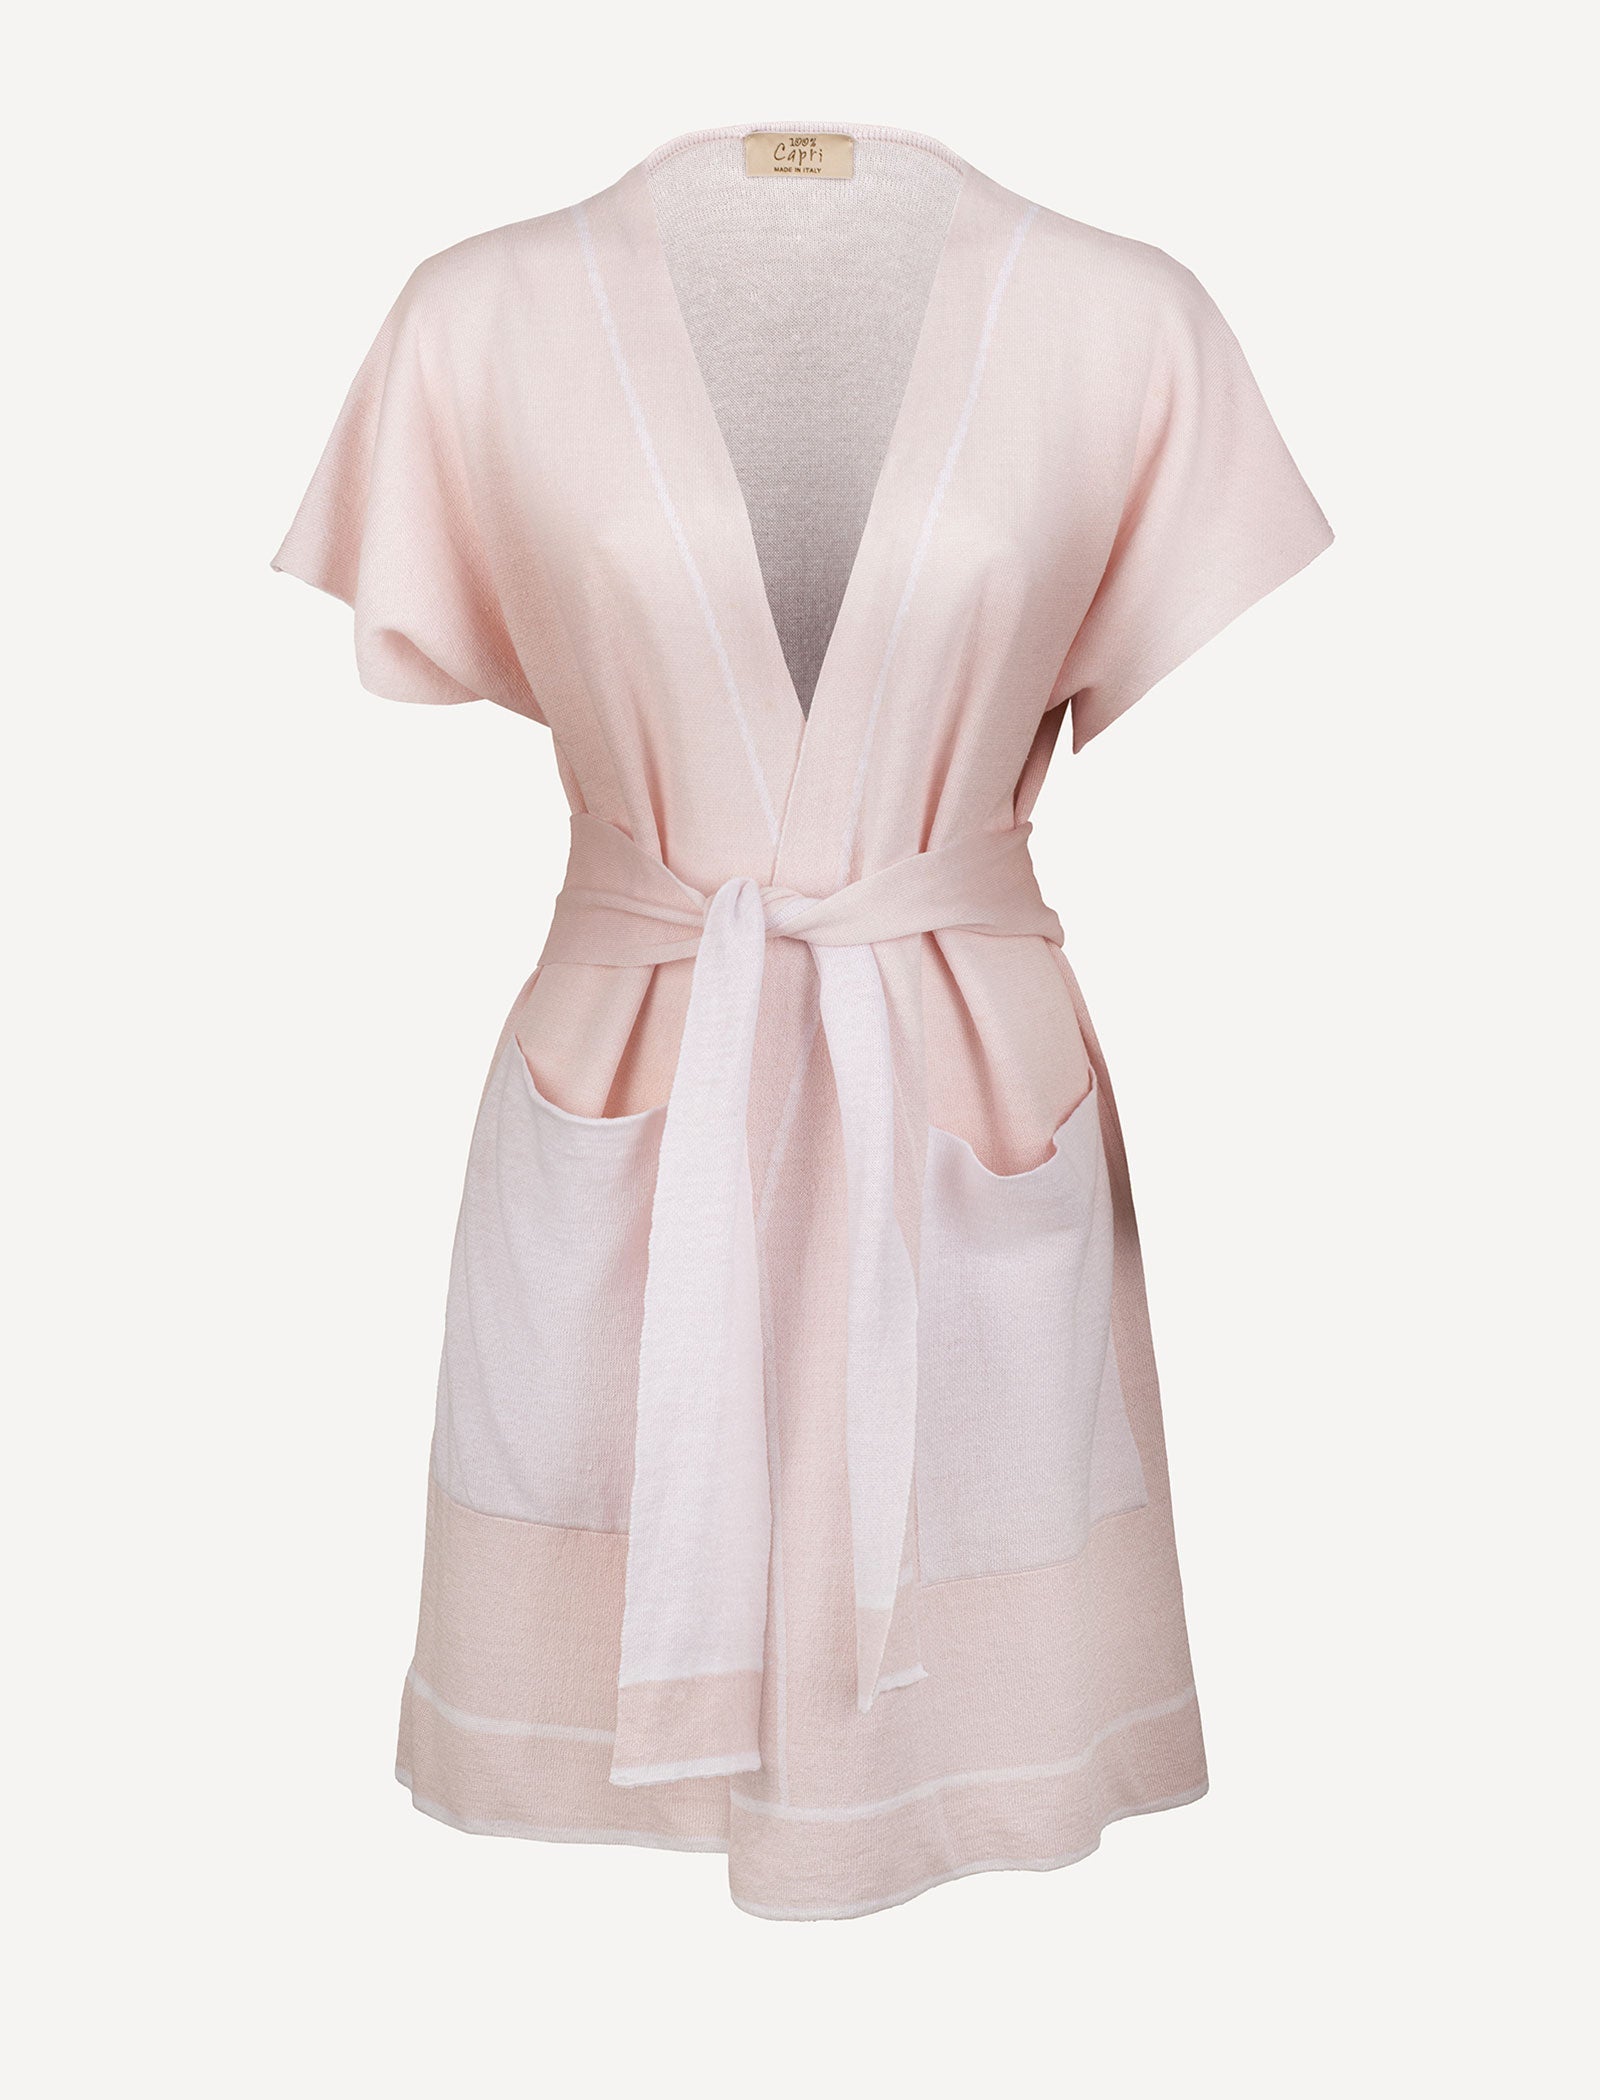 Kimono Jacket 100% Capri white and  pink linen jacket front